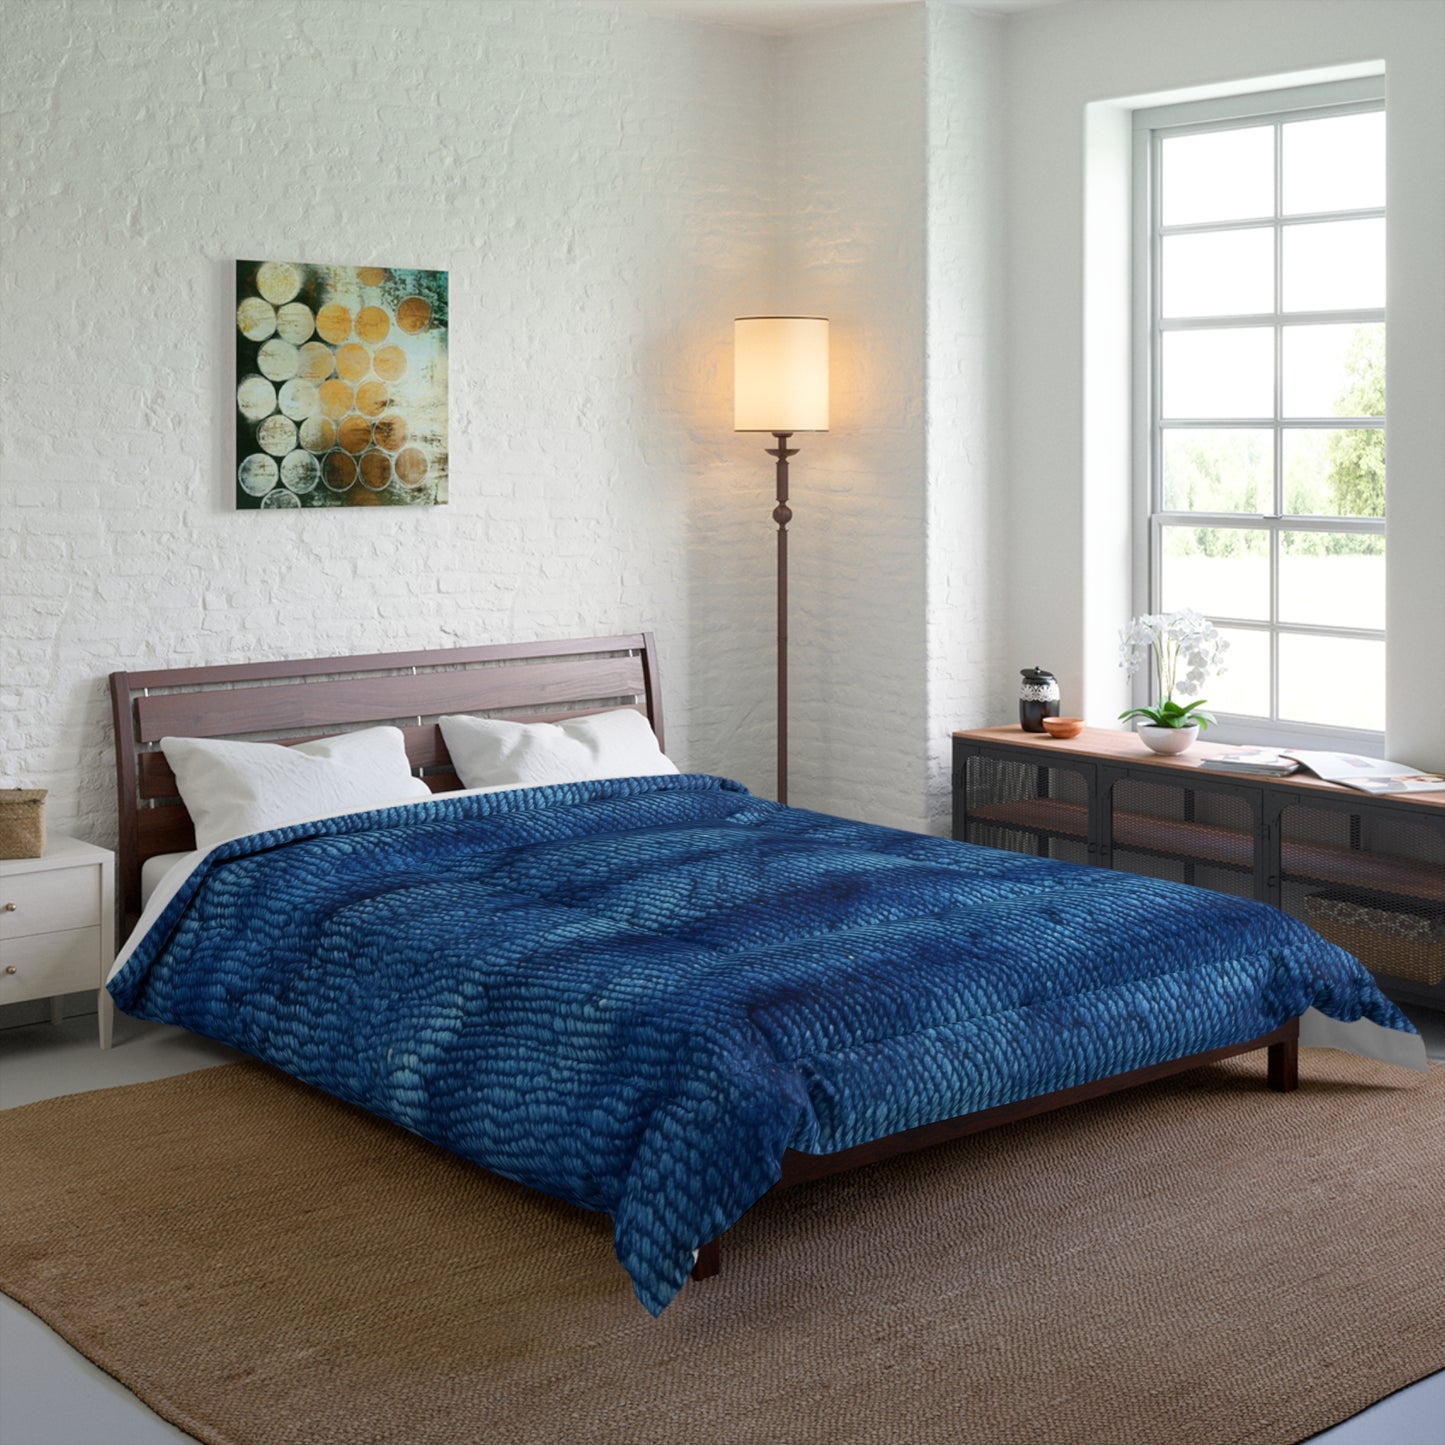 Blue Spectrum: Denim-Inspired Fabric Light to Dark - Comforter